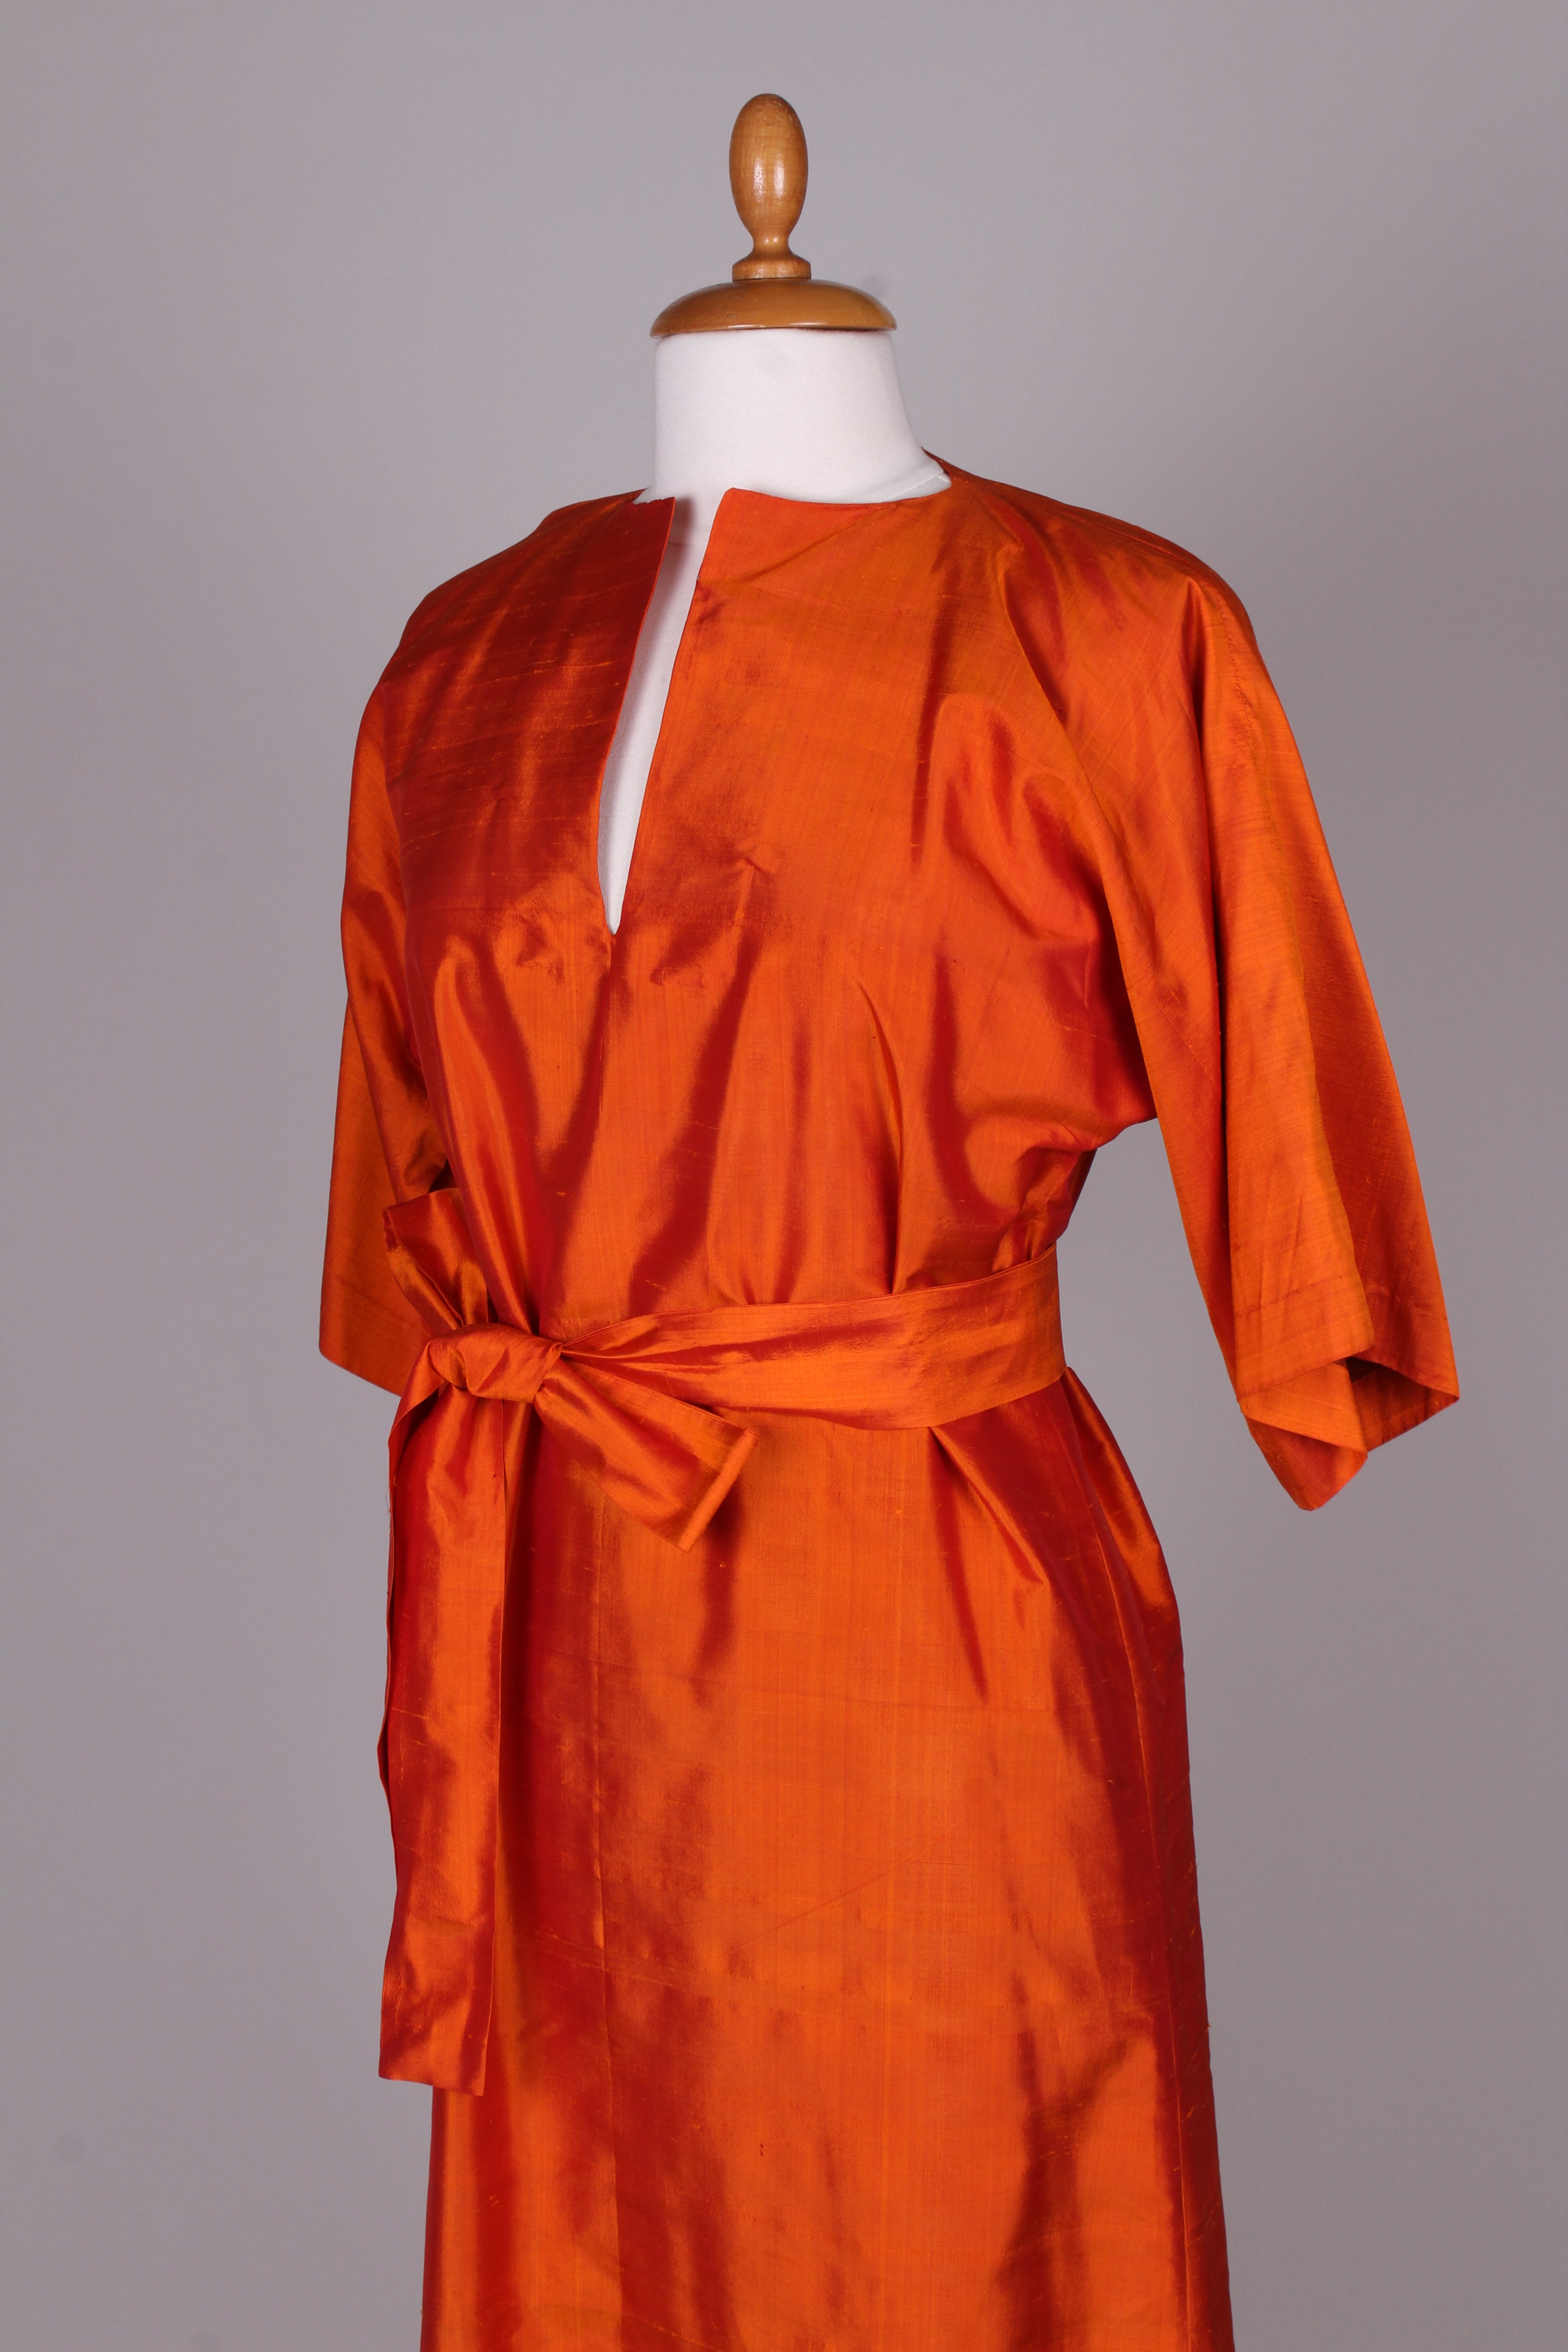 Kimono kjole, Indisk silke 1968. M